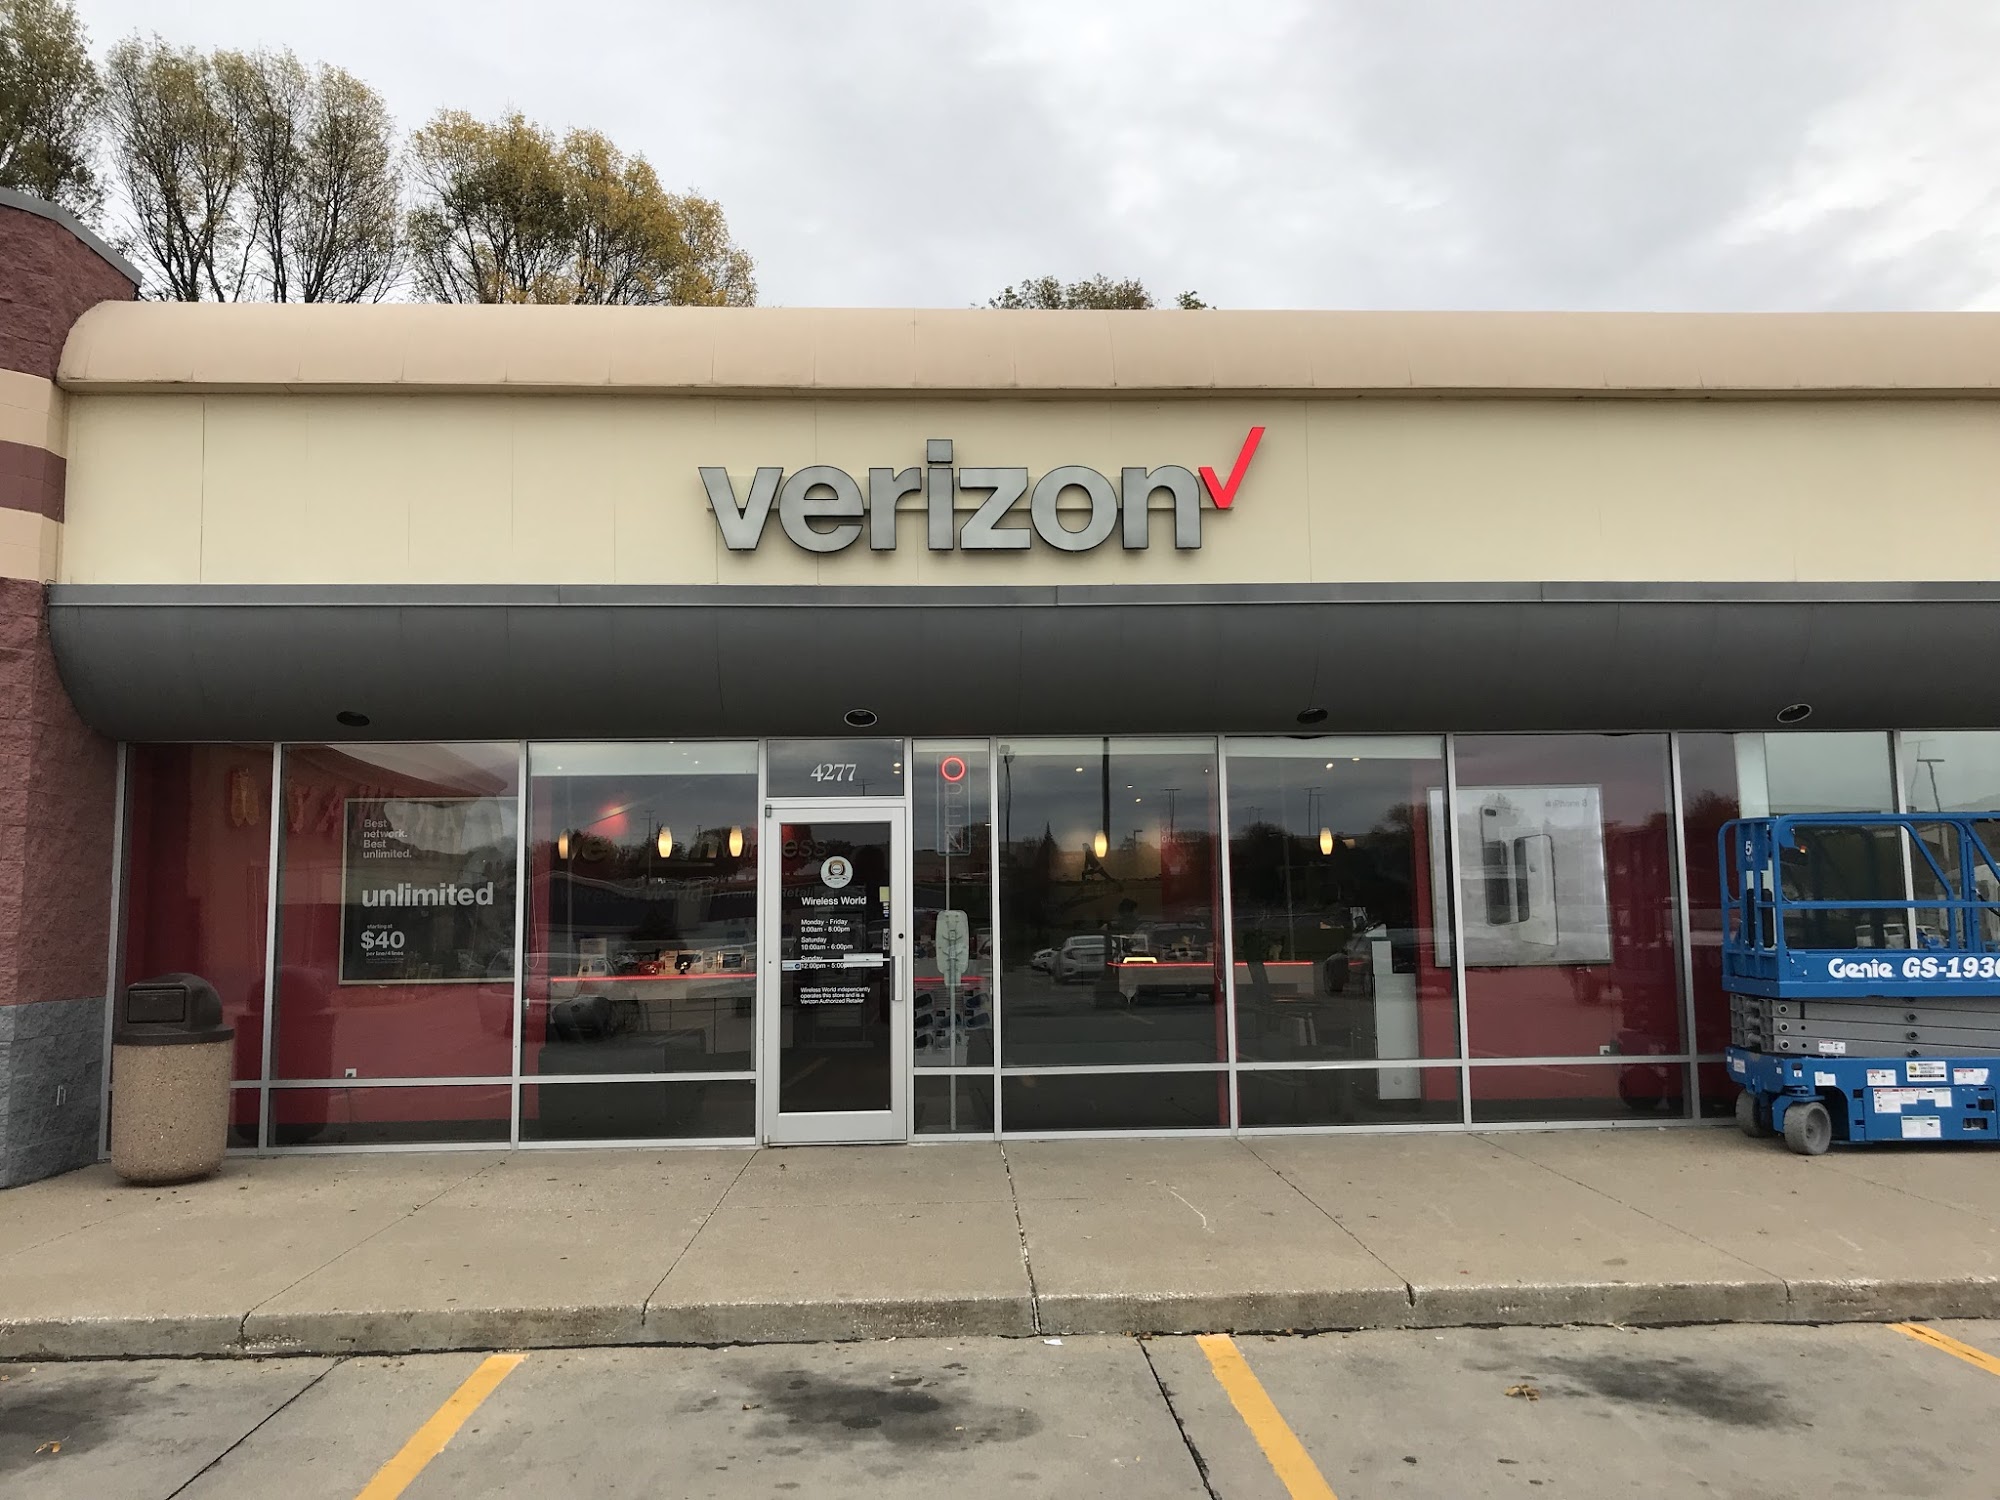 Wireless World - Verizon Authorized Retailer